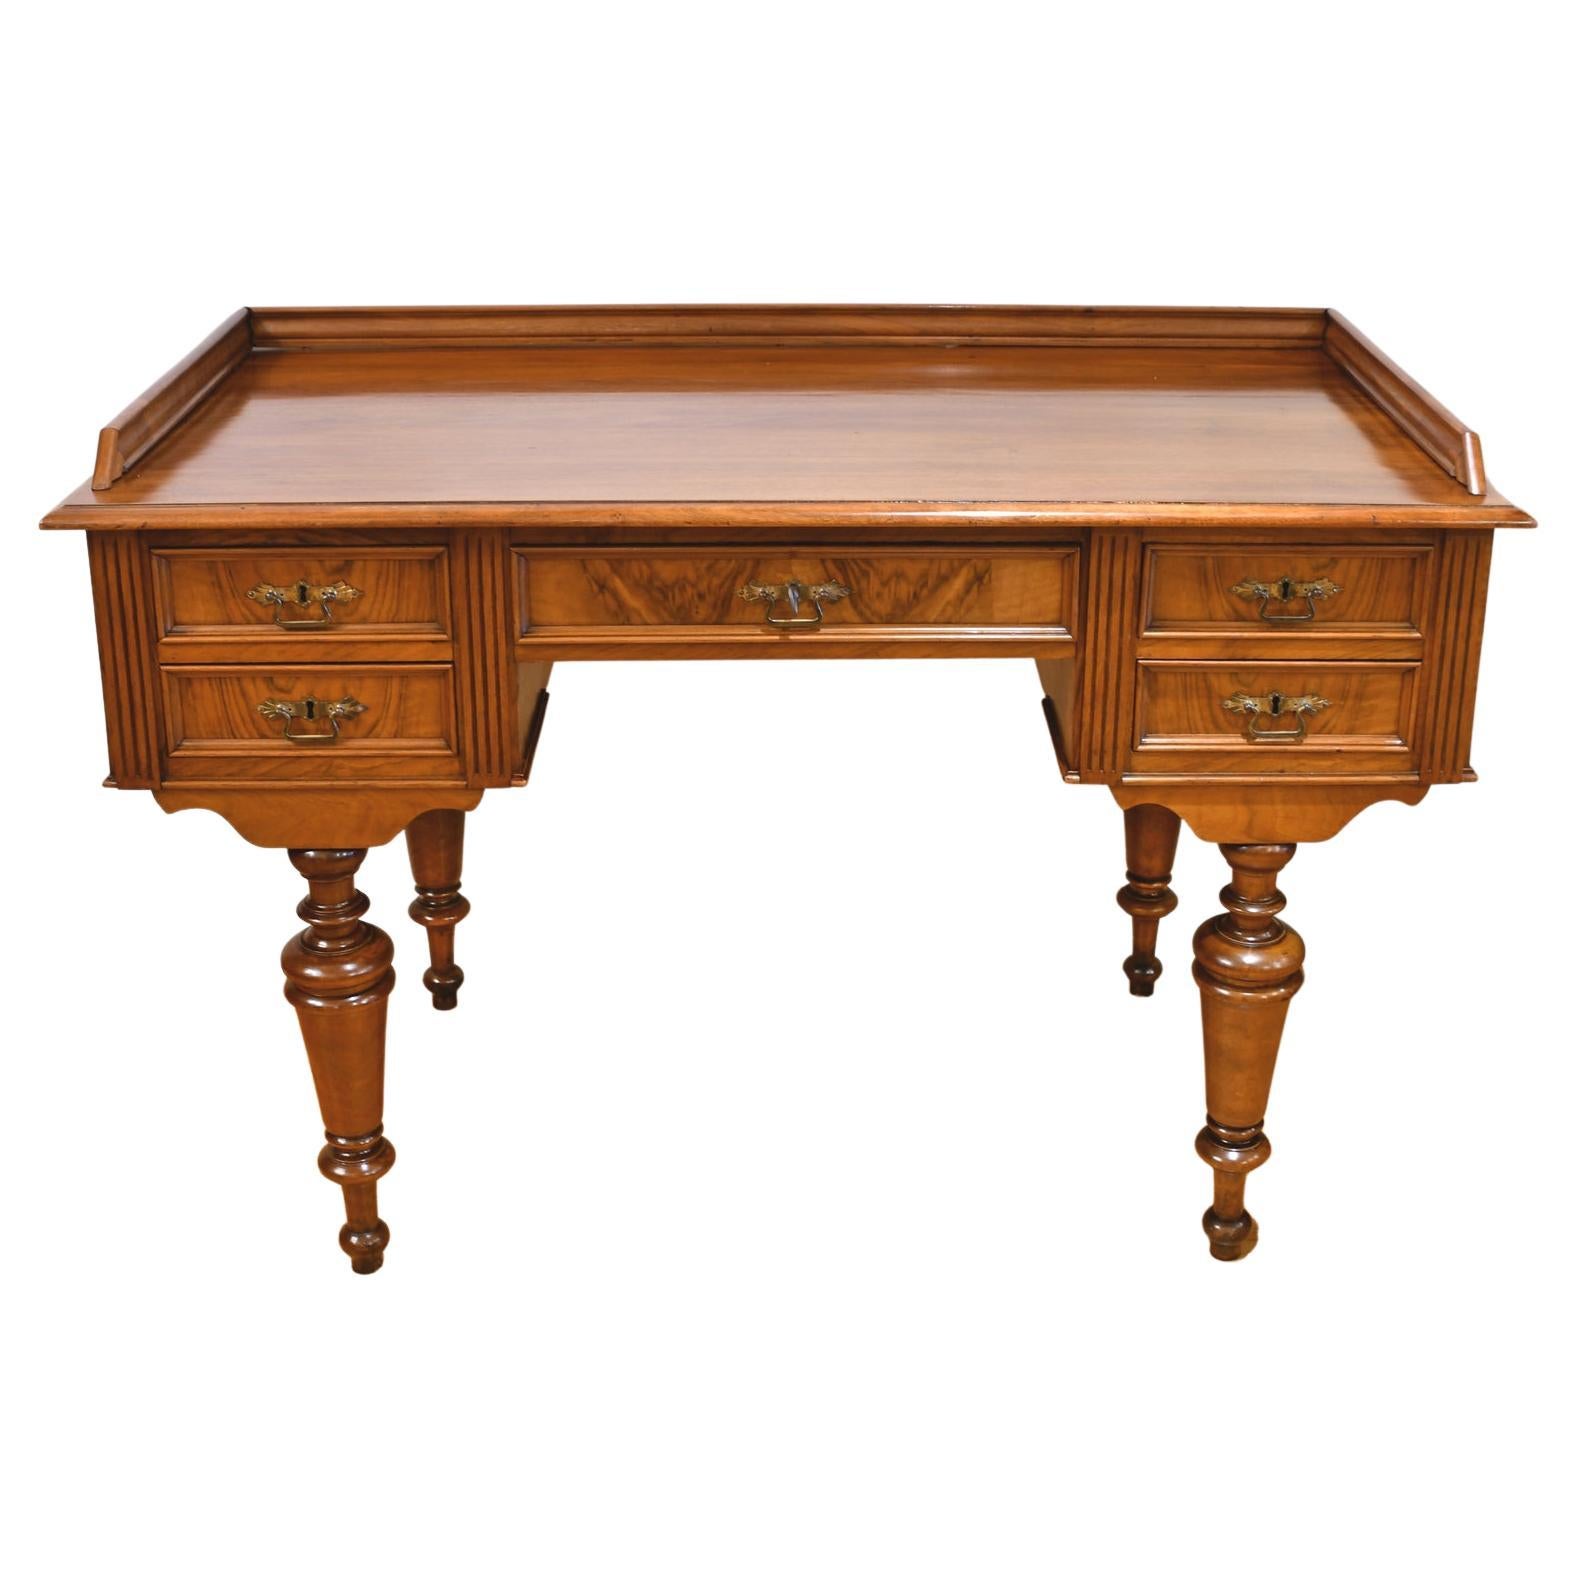 Antique Danish "Hans Christian Andersen" Desk or Writing Table in Figured Walnut For Sale